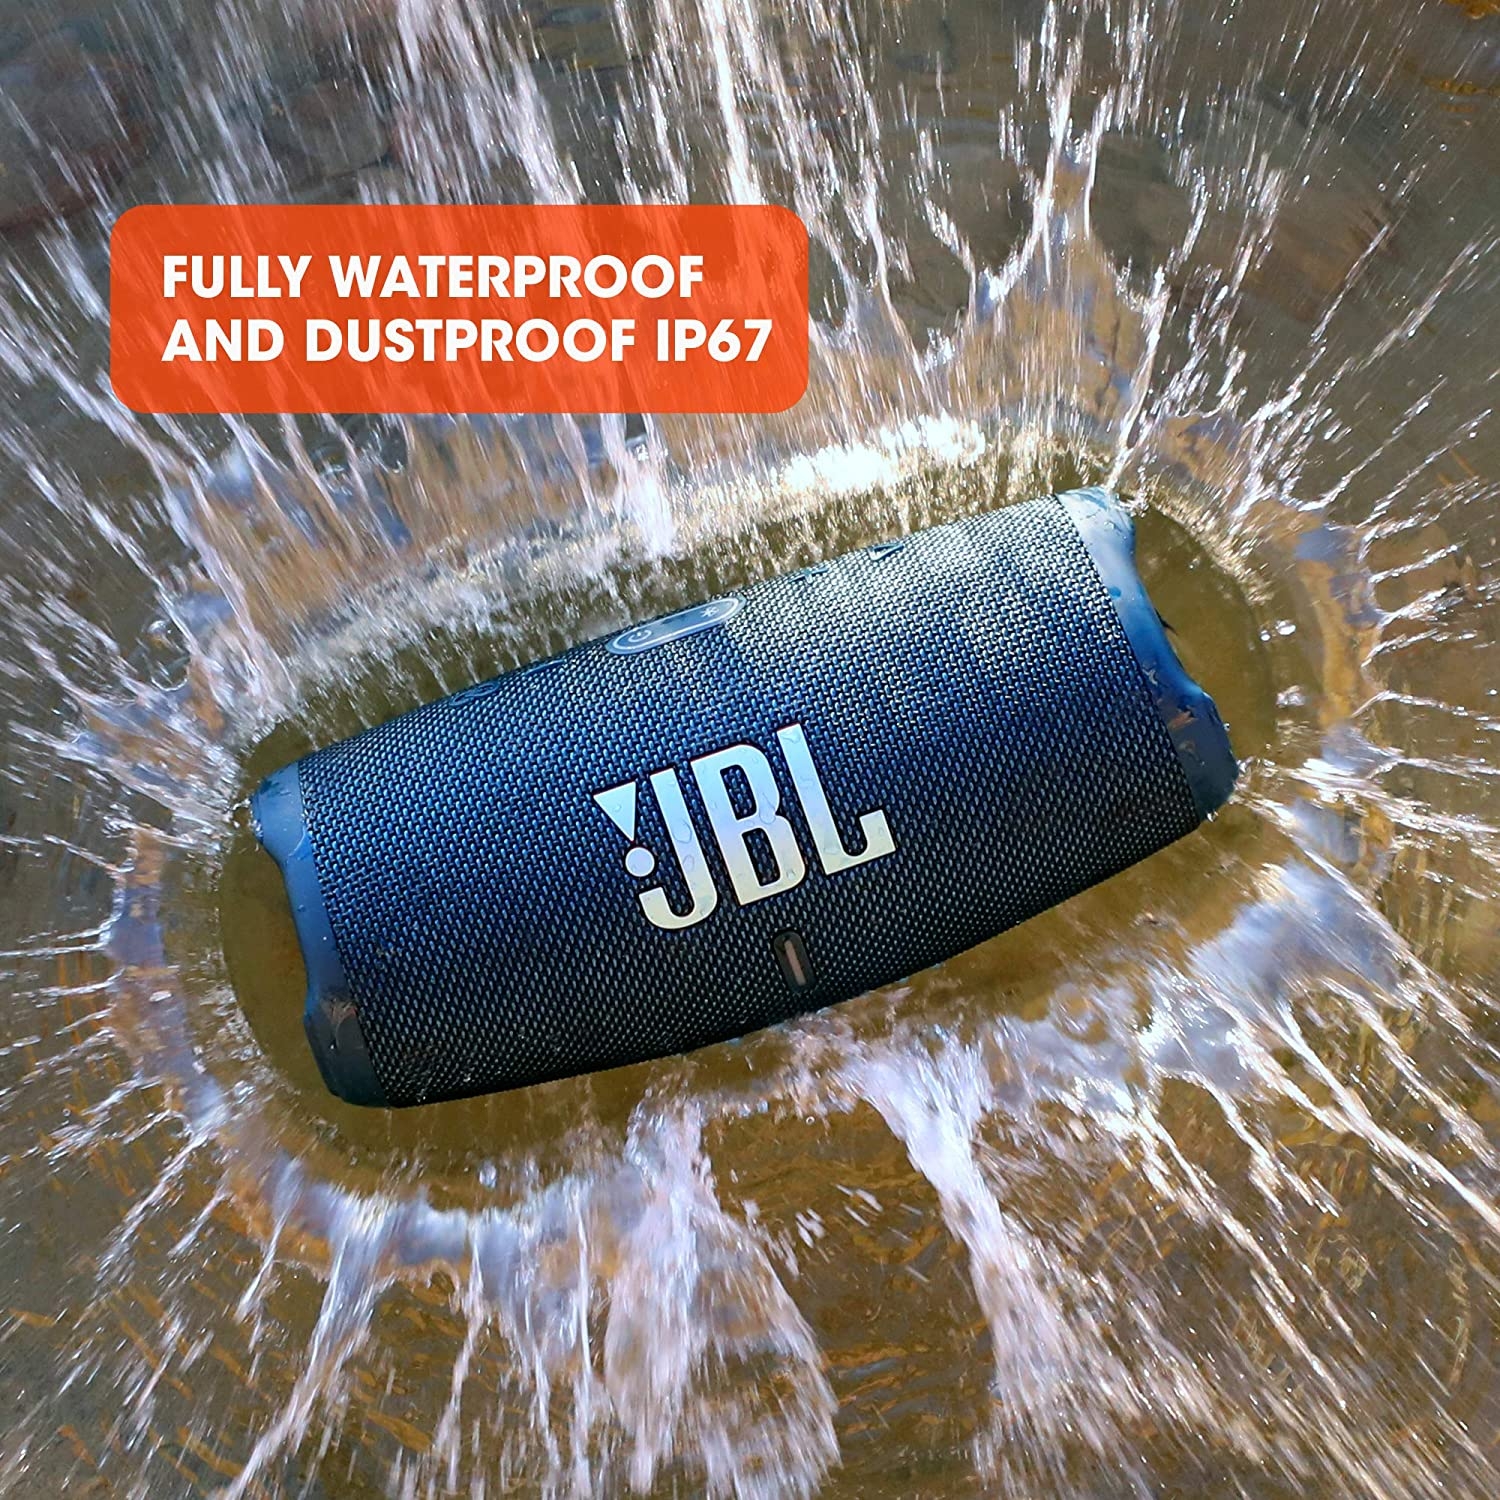 مكبر صوت لاسلكي مقاوم للماء لون أزرق JBL Charge5 Splashproof Portable Bluetooth Speaker - JBL